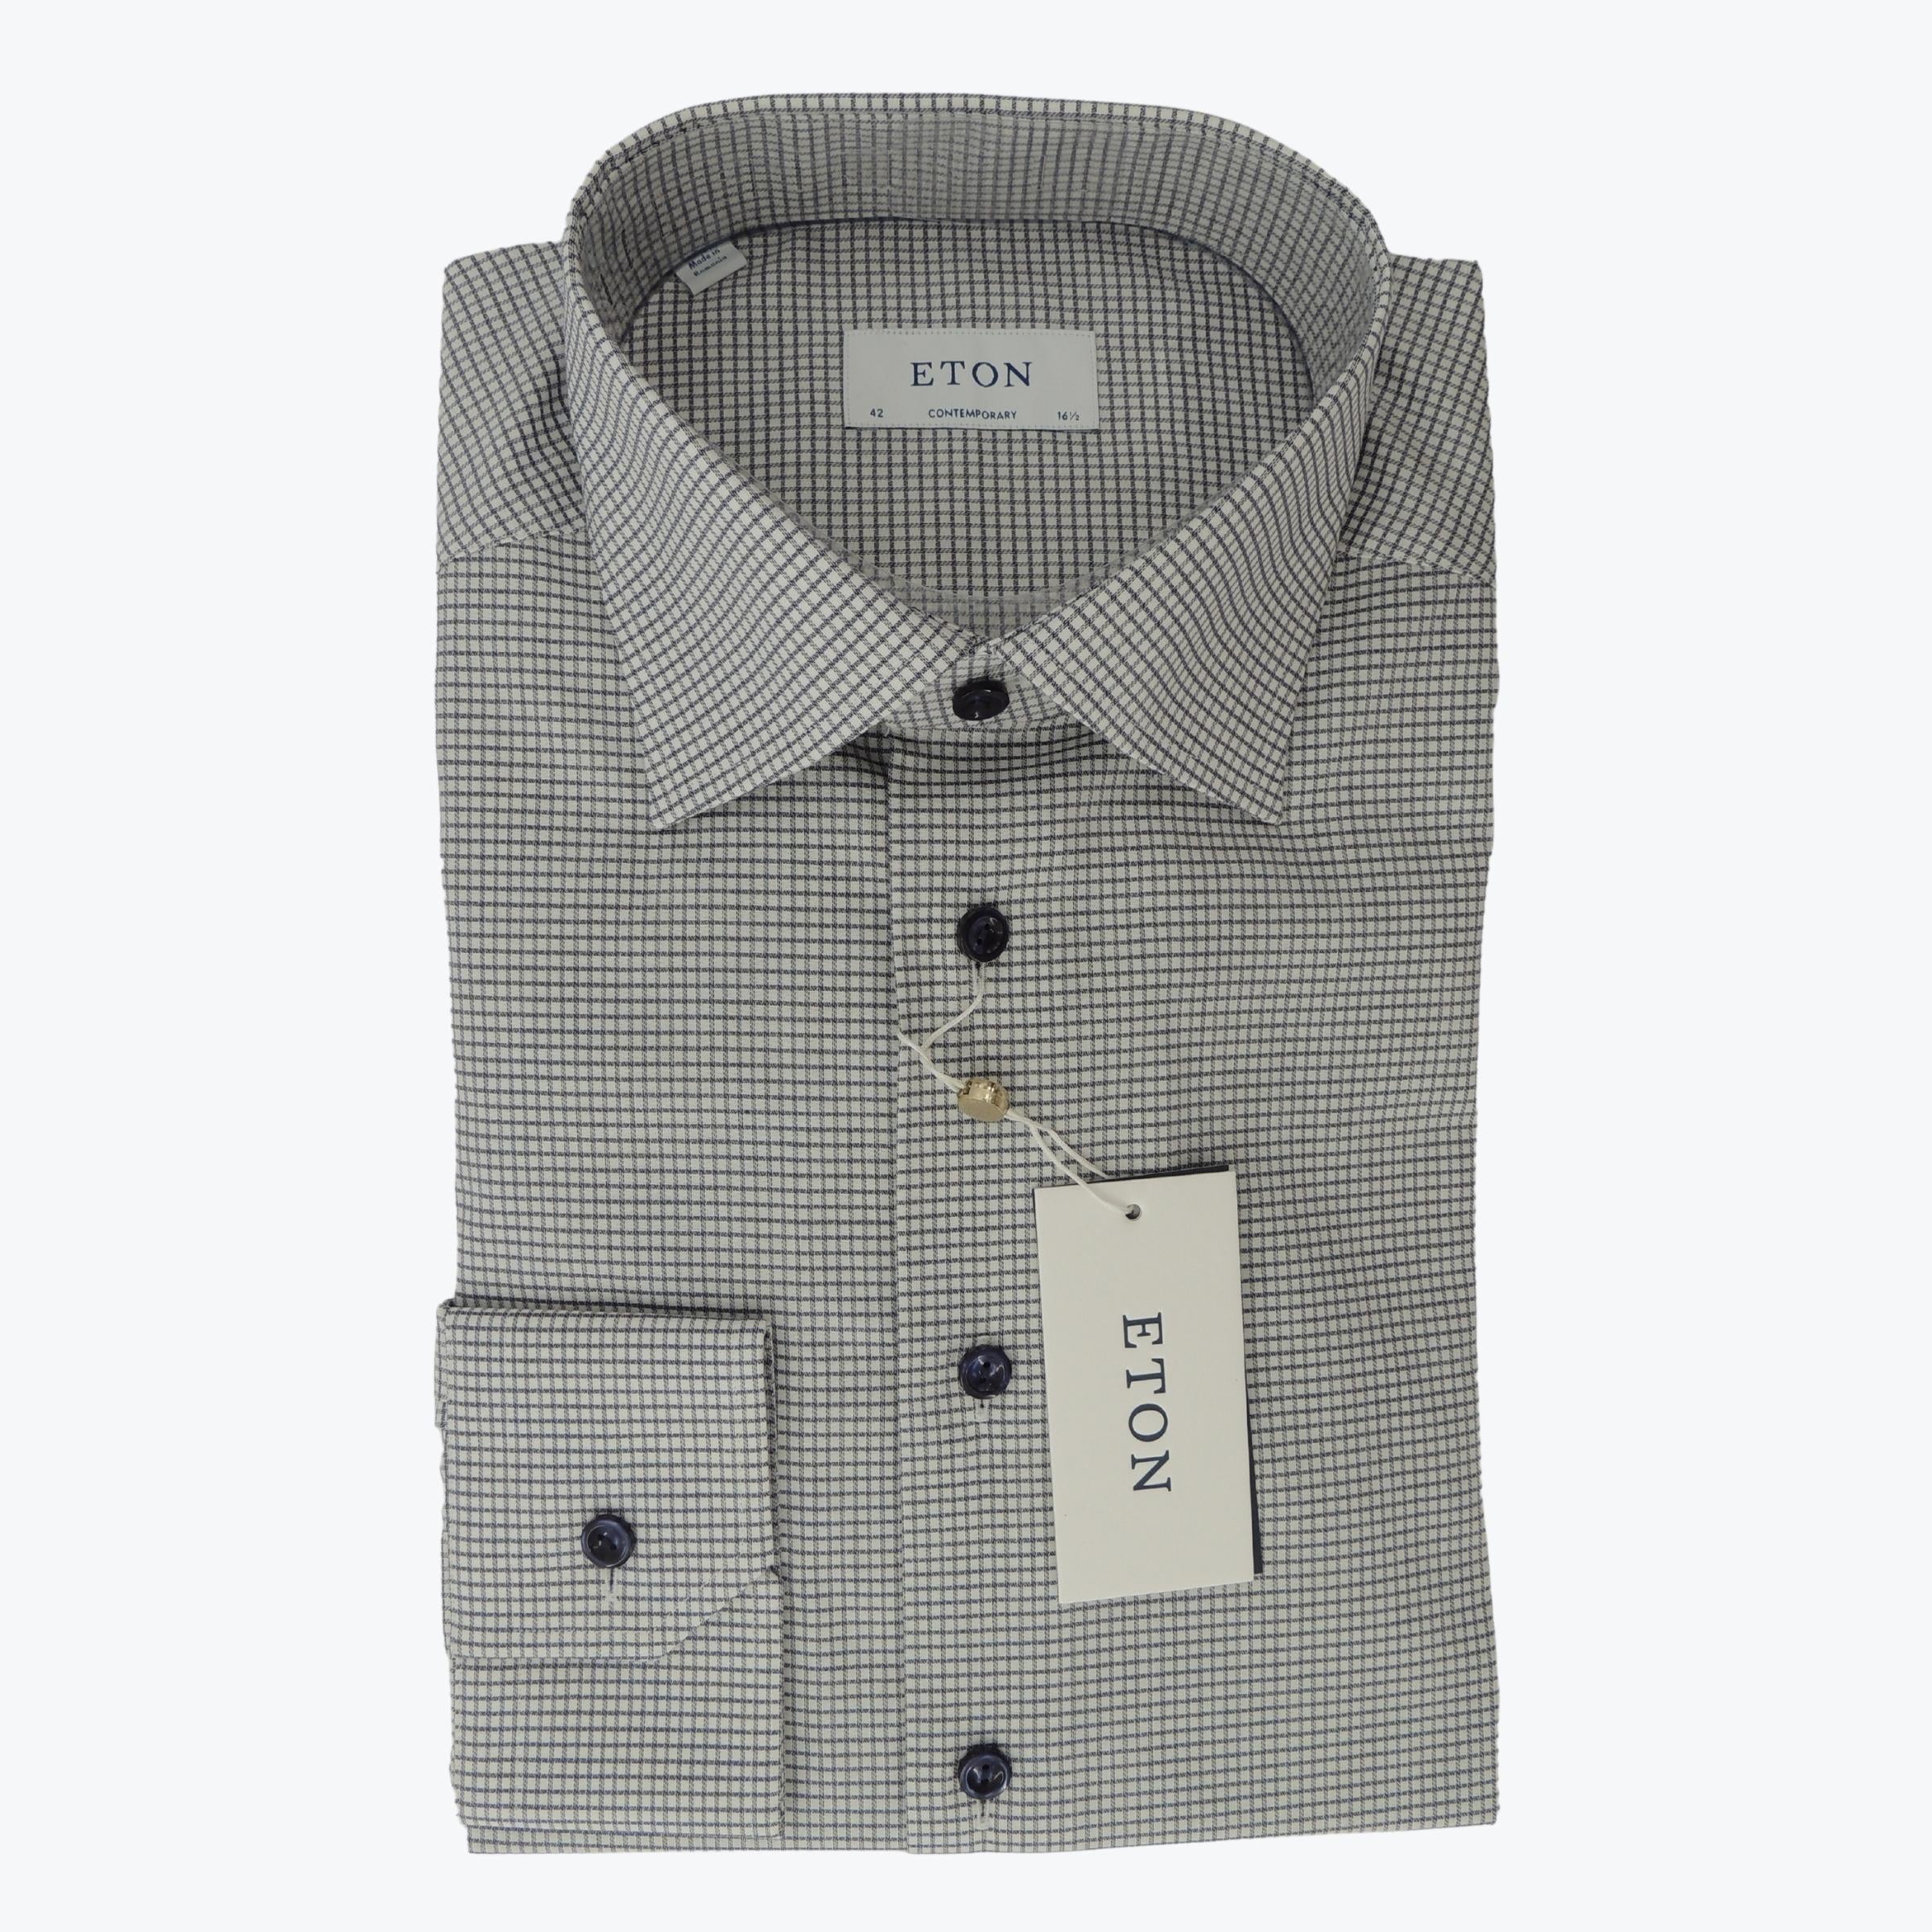 Eton Men's Contemporary Fit Shirt, Black Micro Check, Size 39/15½